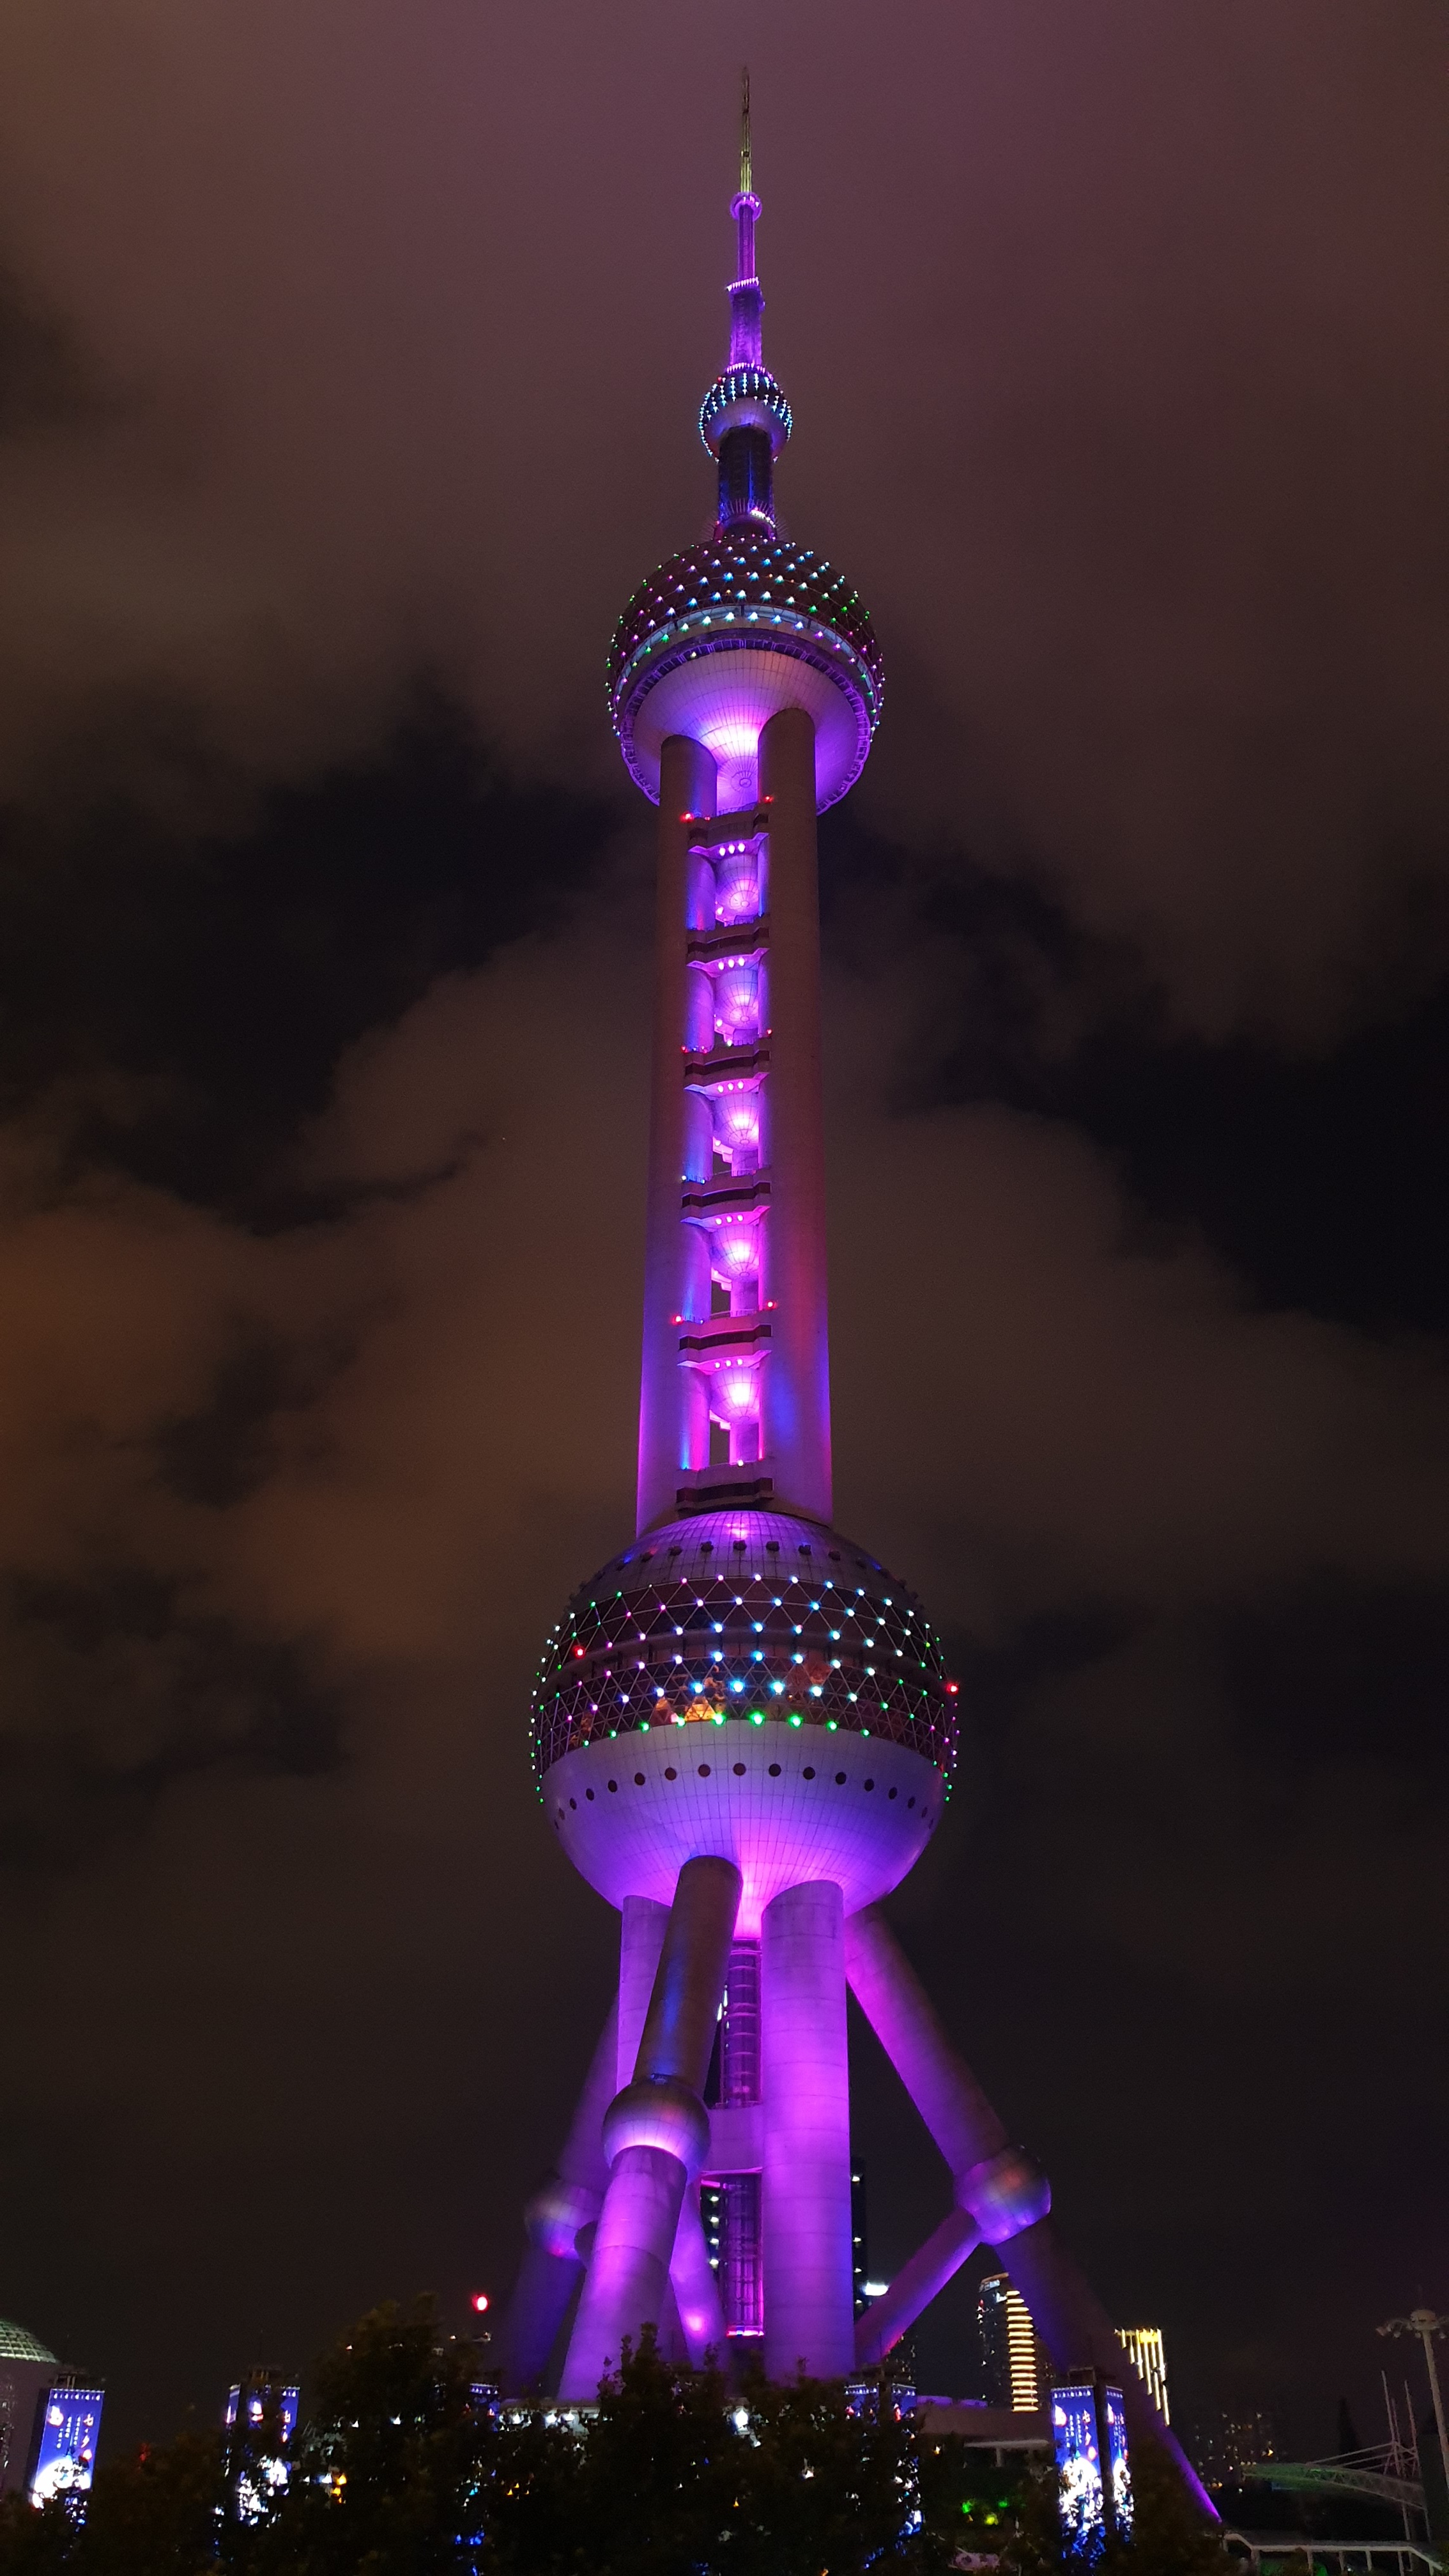 backlight, violet, building, purple, cities, architecture, illumination, tower